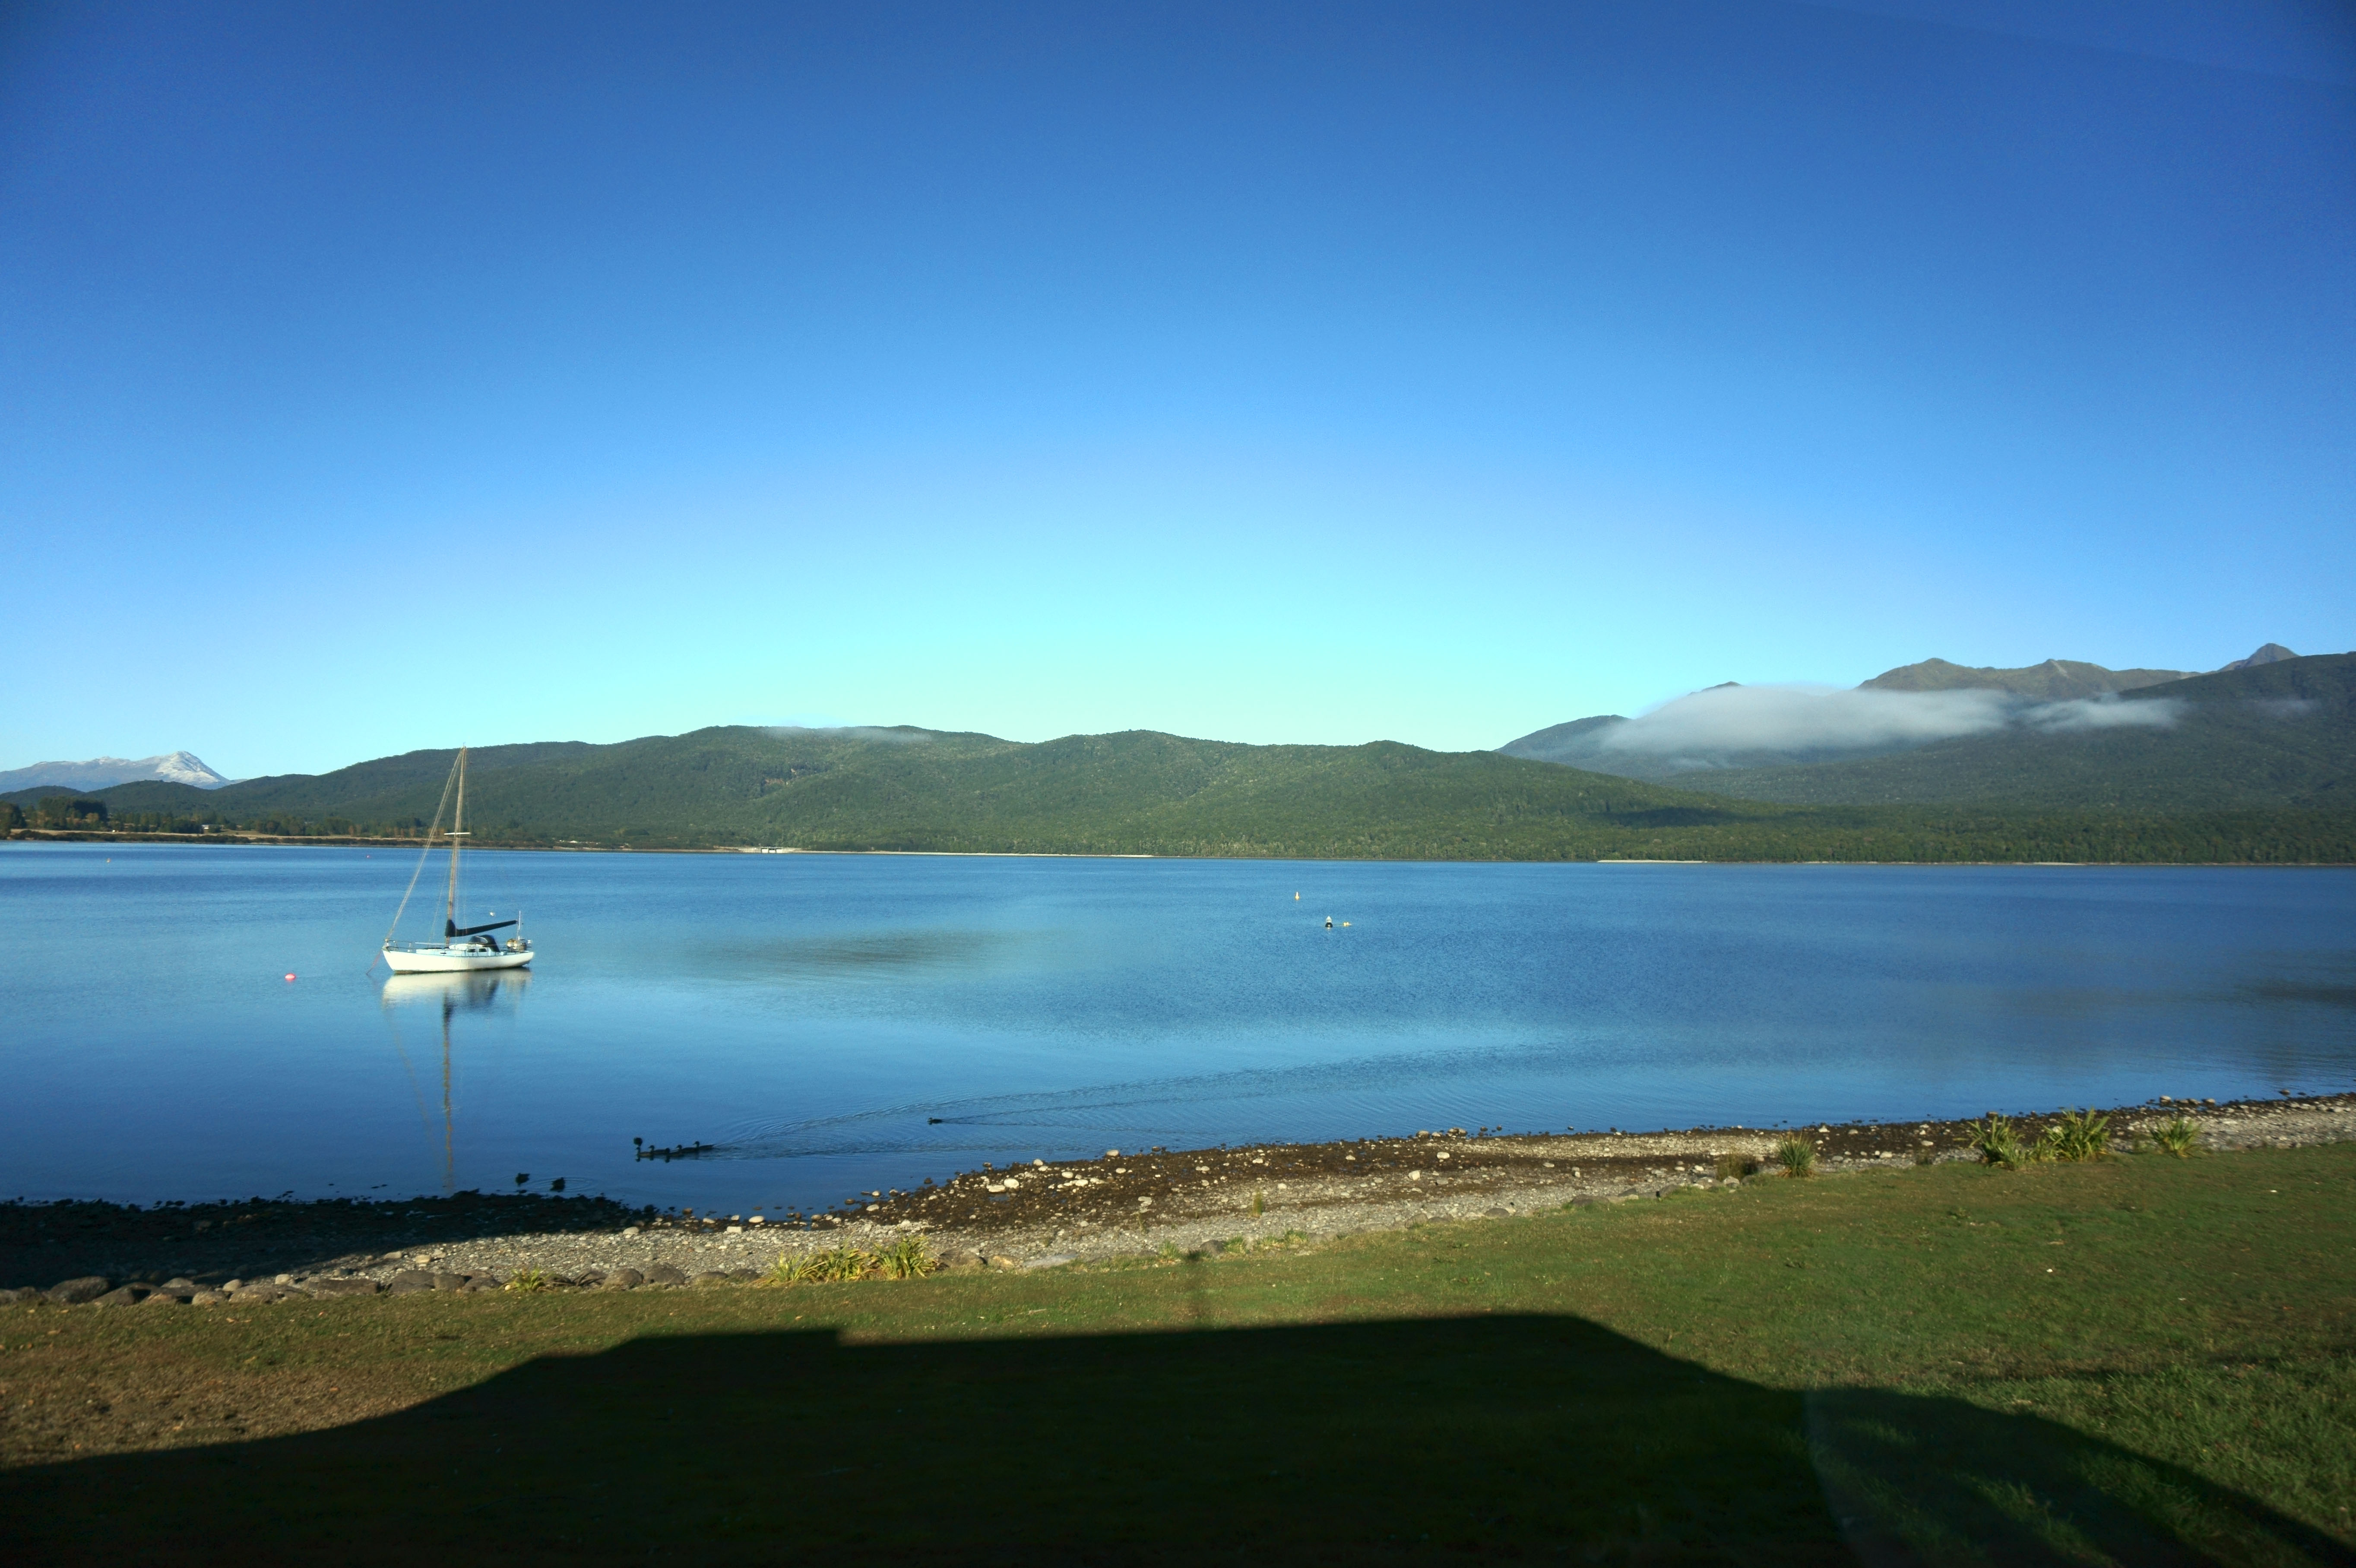 Foto, materieel, vrij, landschap, schilderstuk, bevoorraden foto,Lake Te Anau, , , , 